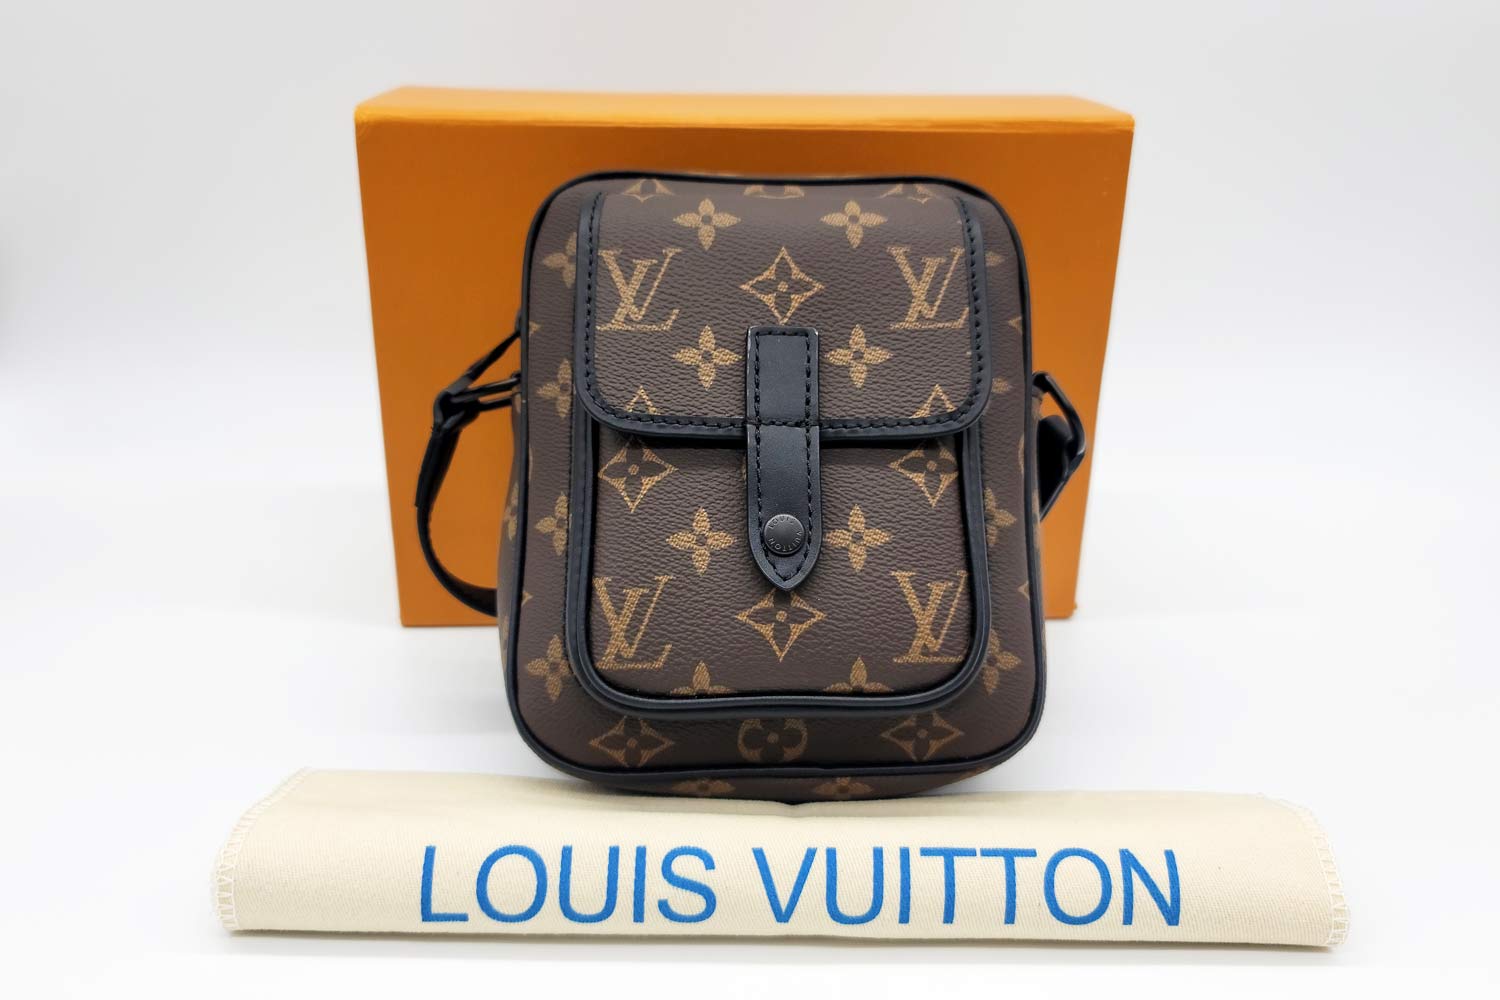 Louis Vuitton Christopher Wearable Wallet